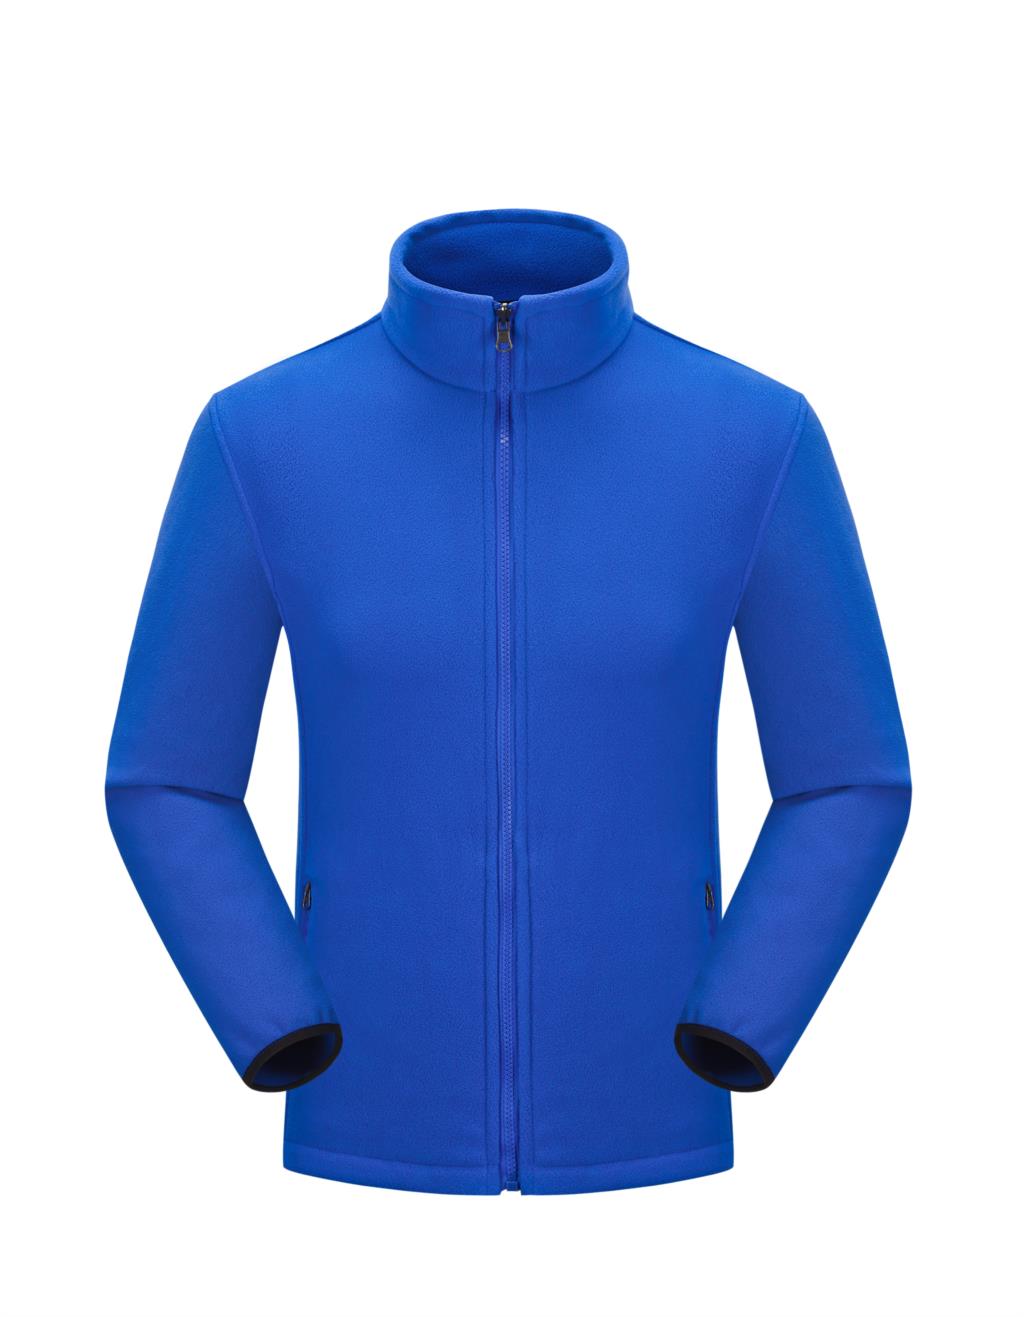 Compra royal-blue Women long sleeve Zip up Fleece Sweatshirts for Running